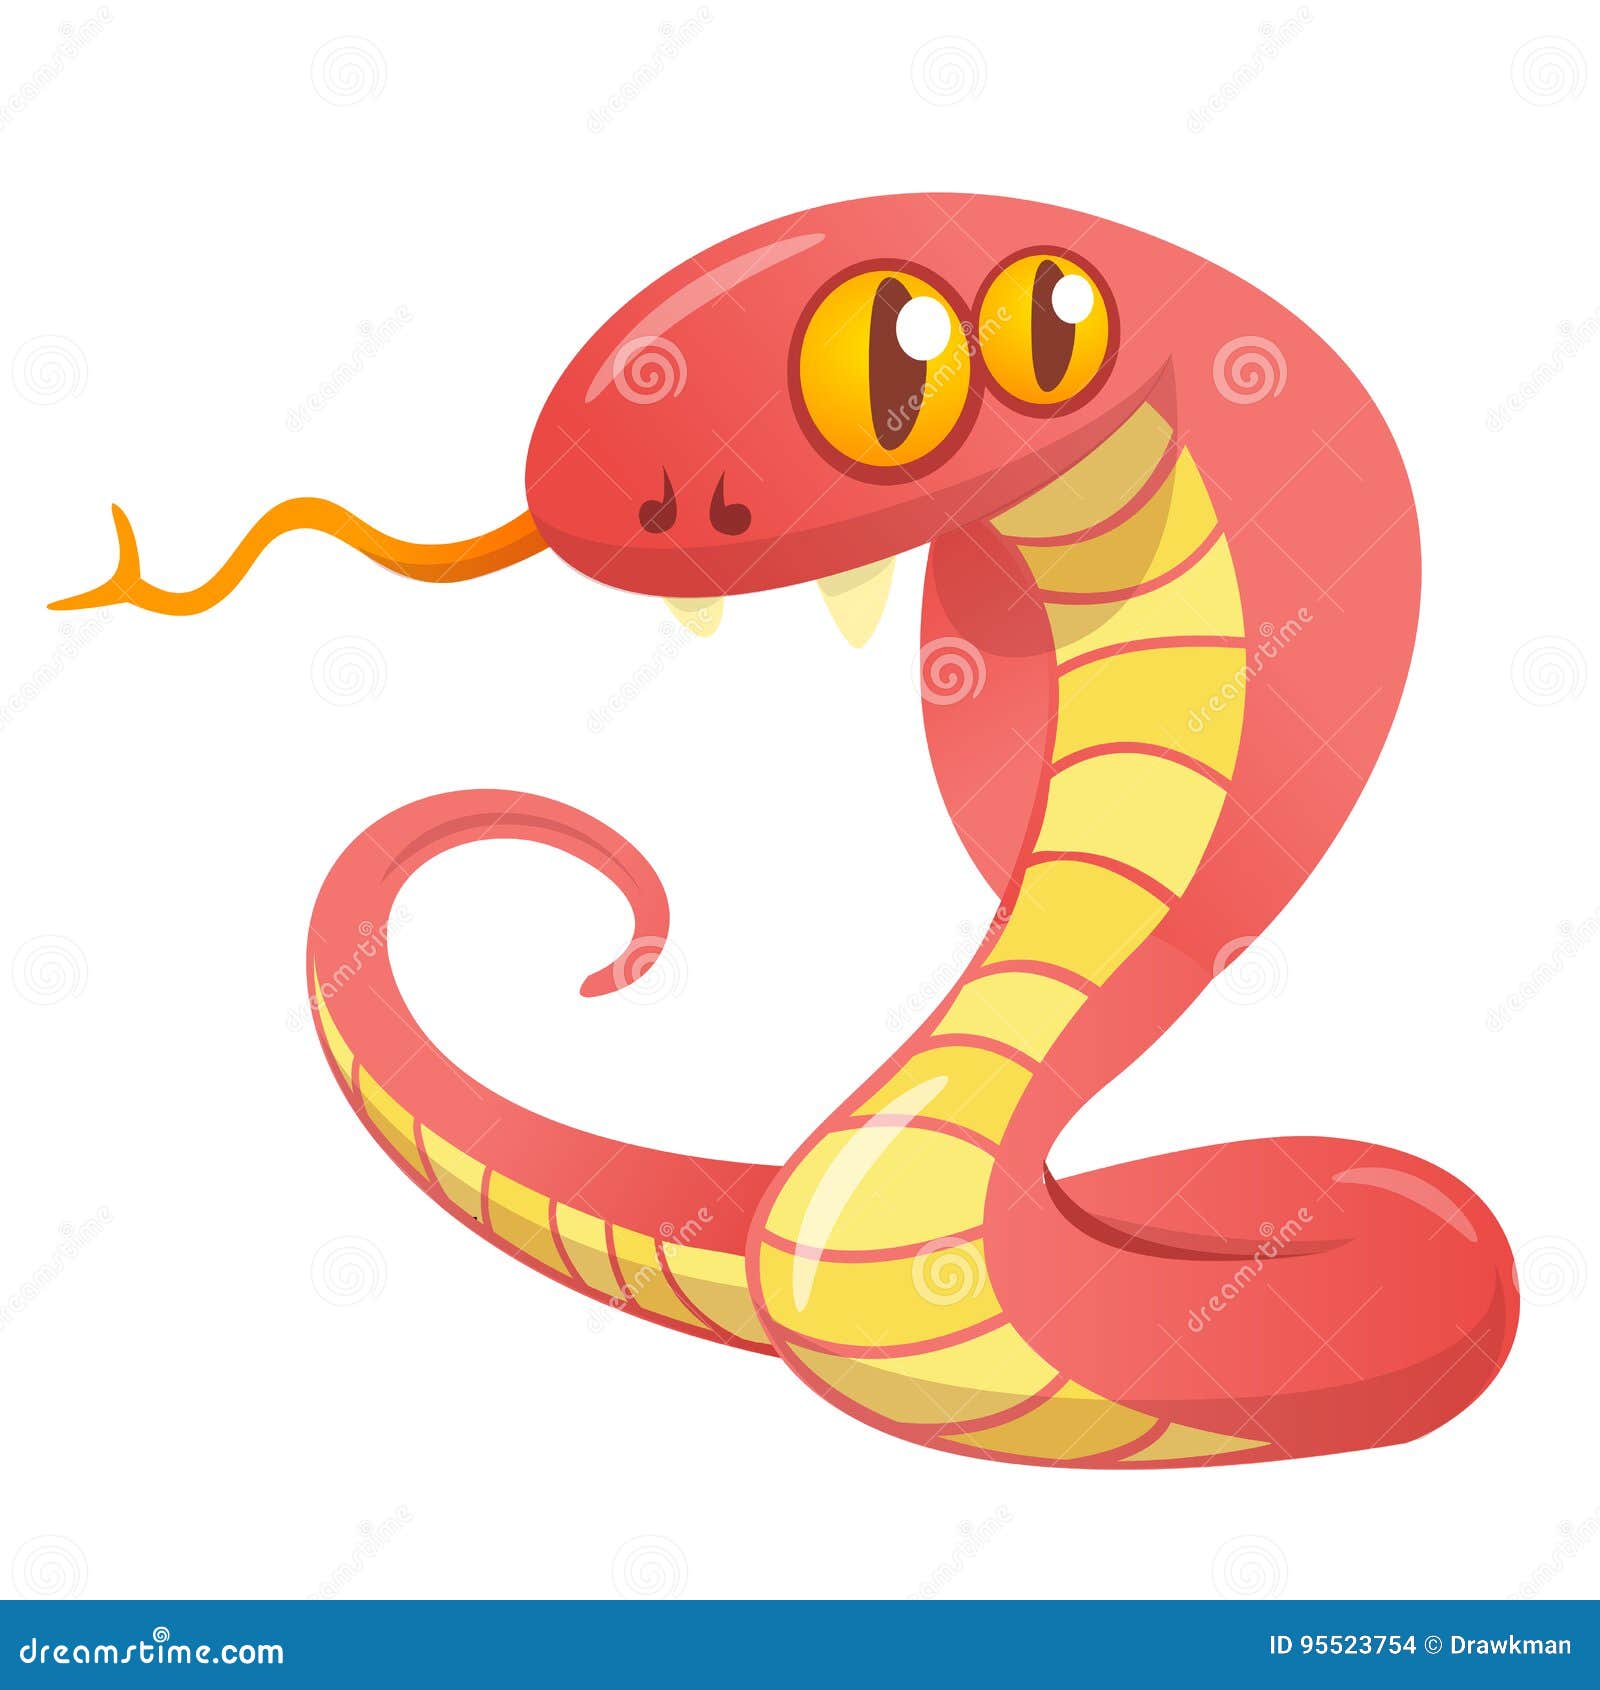 Blue Cobra Snake Cartoon Icon Vector Illustration Stock